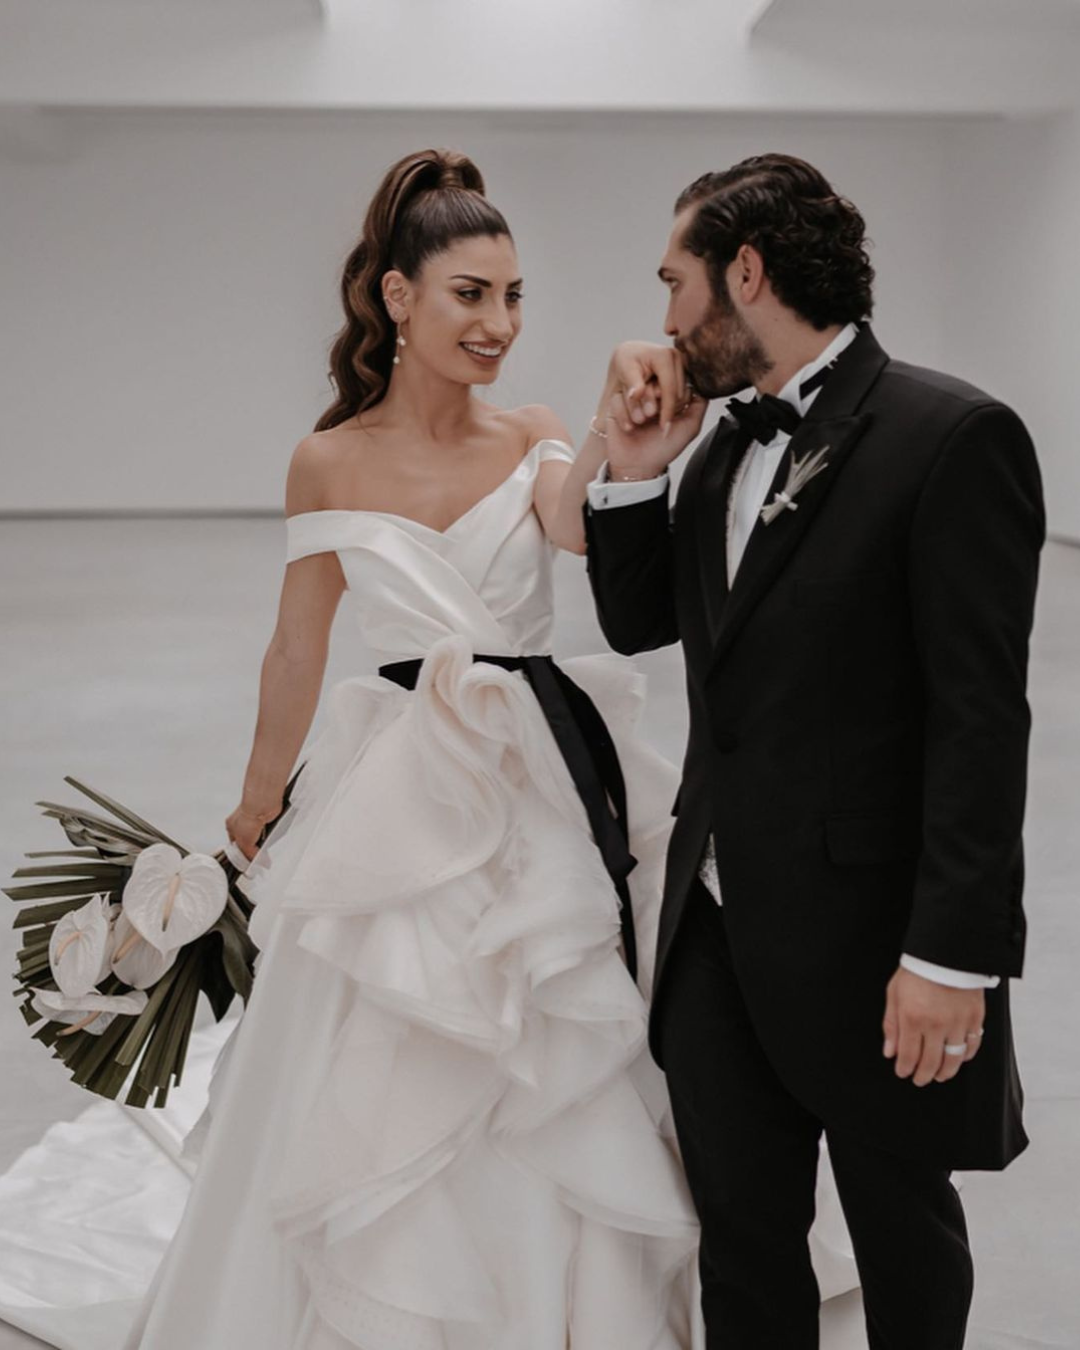 black and white wedding dresses unique ideas for brides